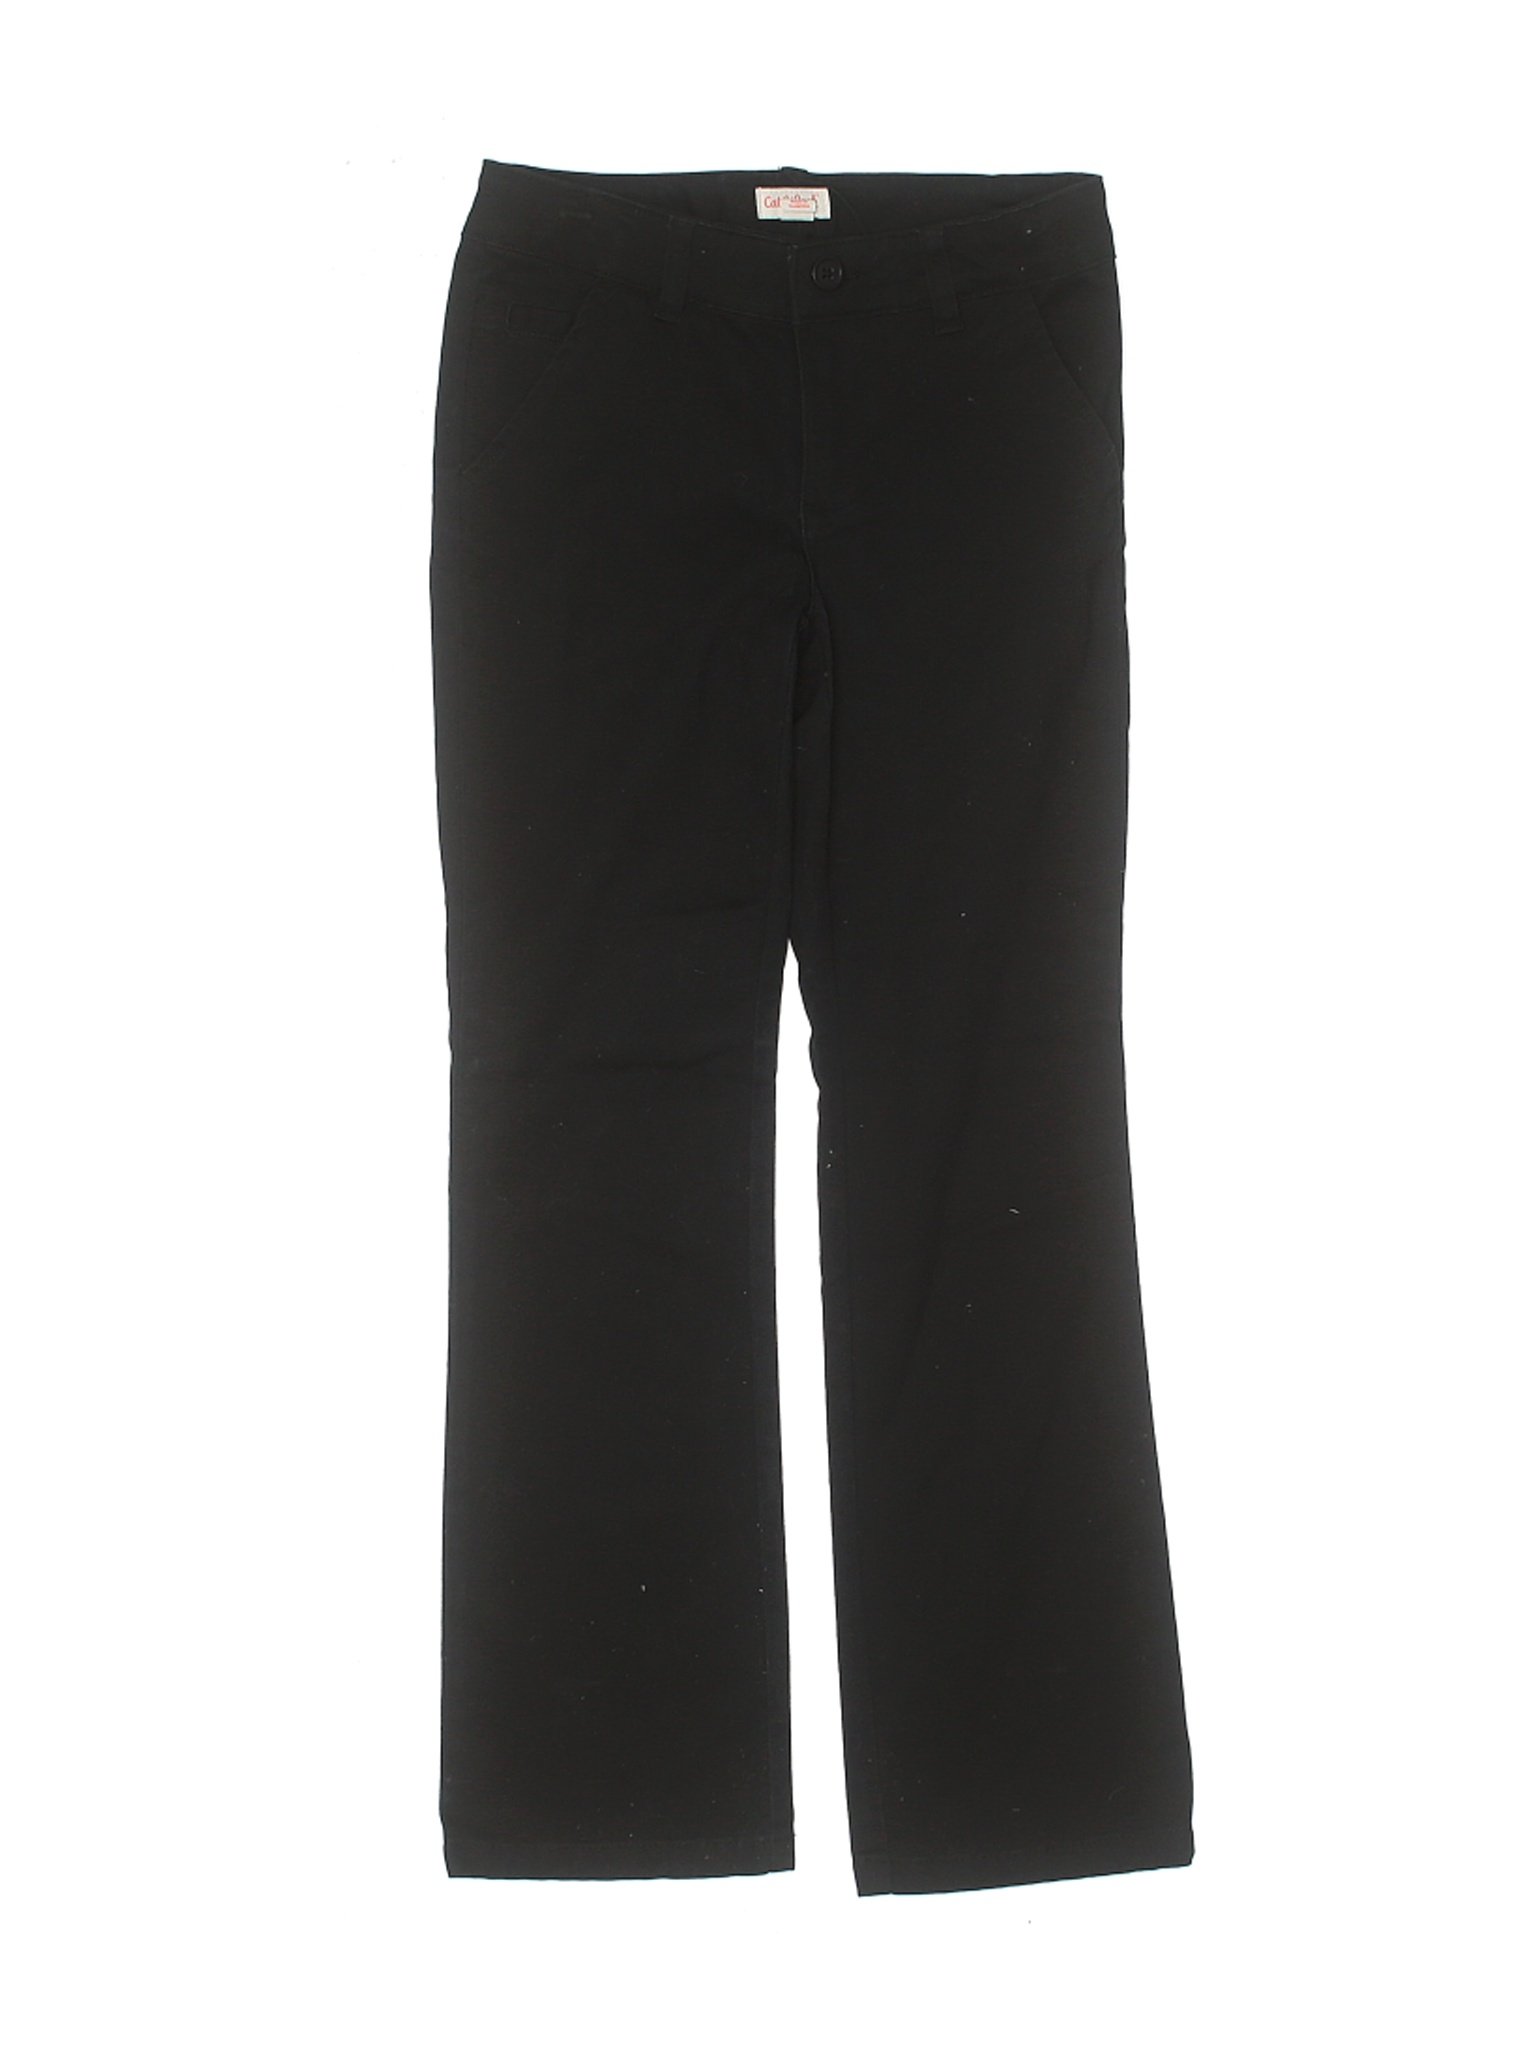 Cat & Jack Girls Black Dress Pants 8 | eBay